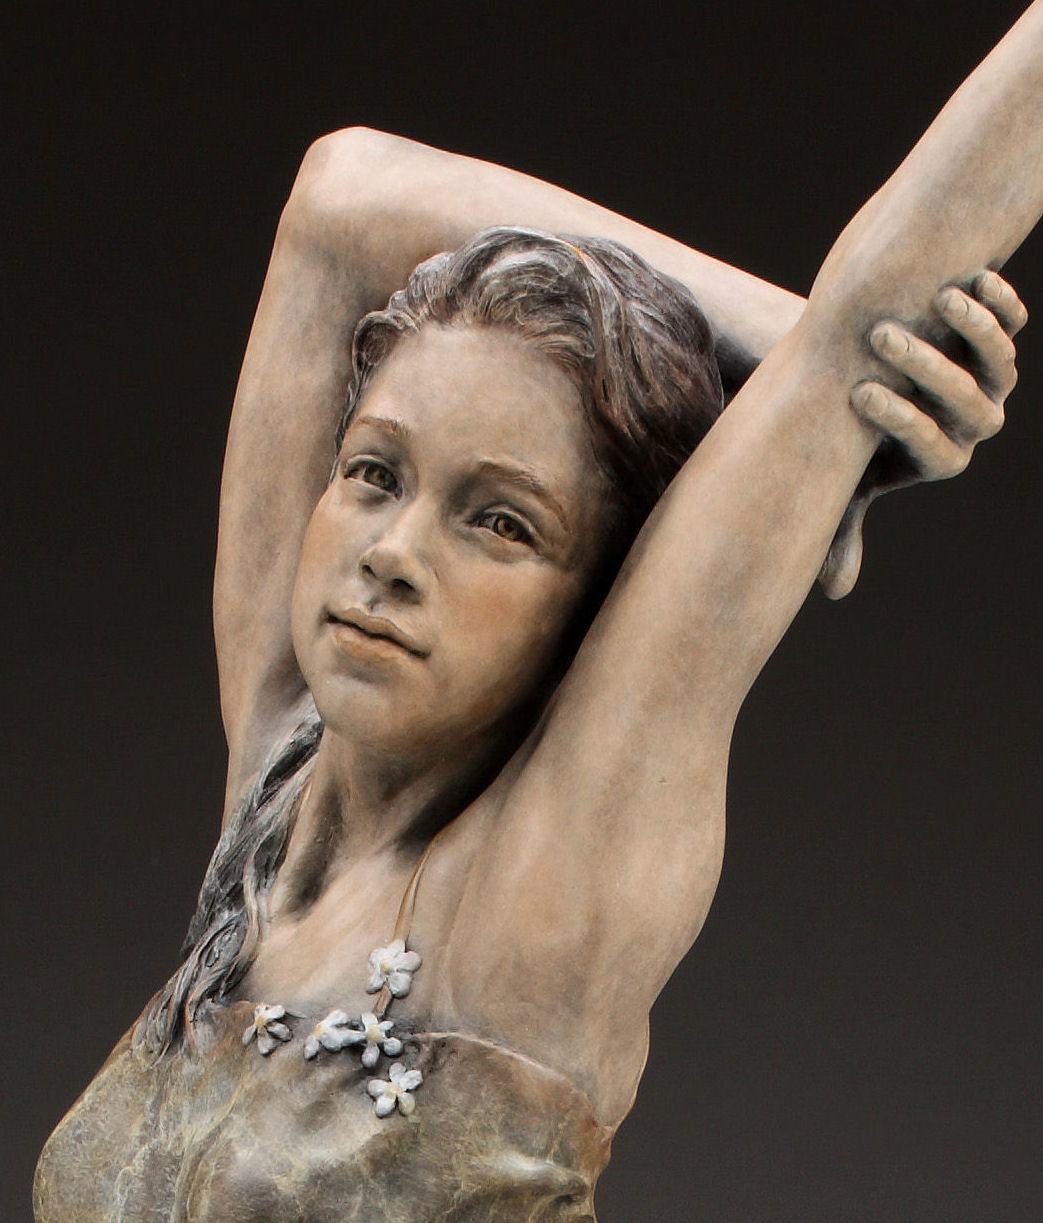 18 sculpture works by angela mia la vega